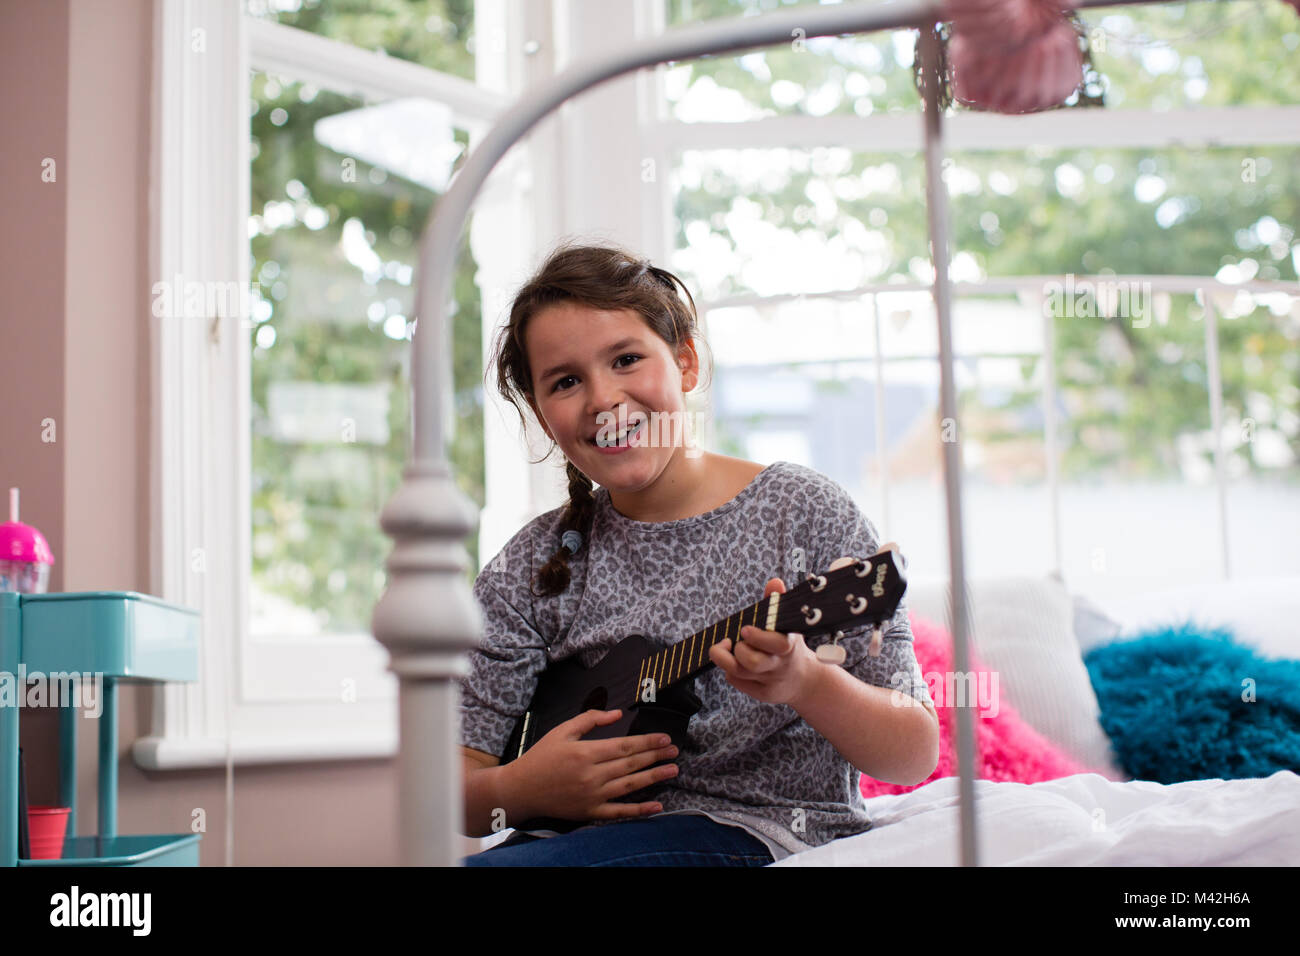 Girl playing a ukulele looking at camera Stock Photo